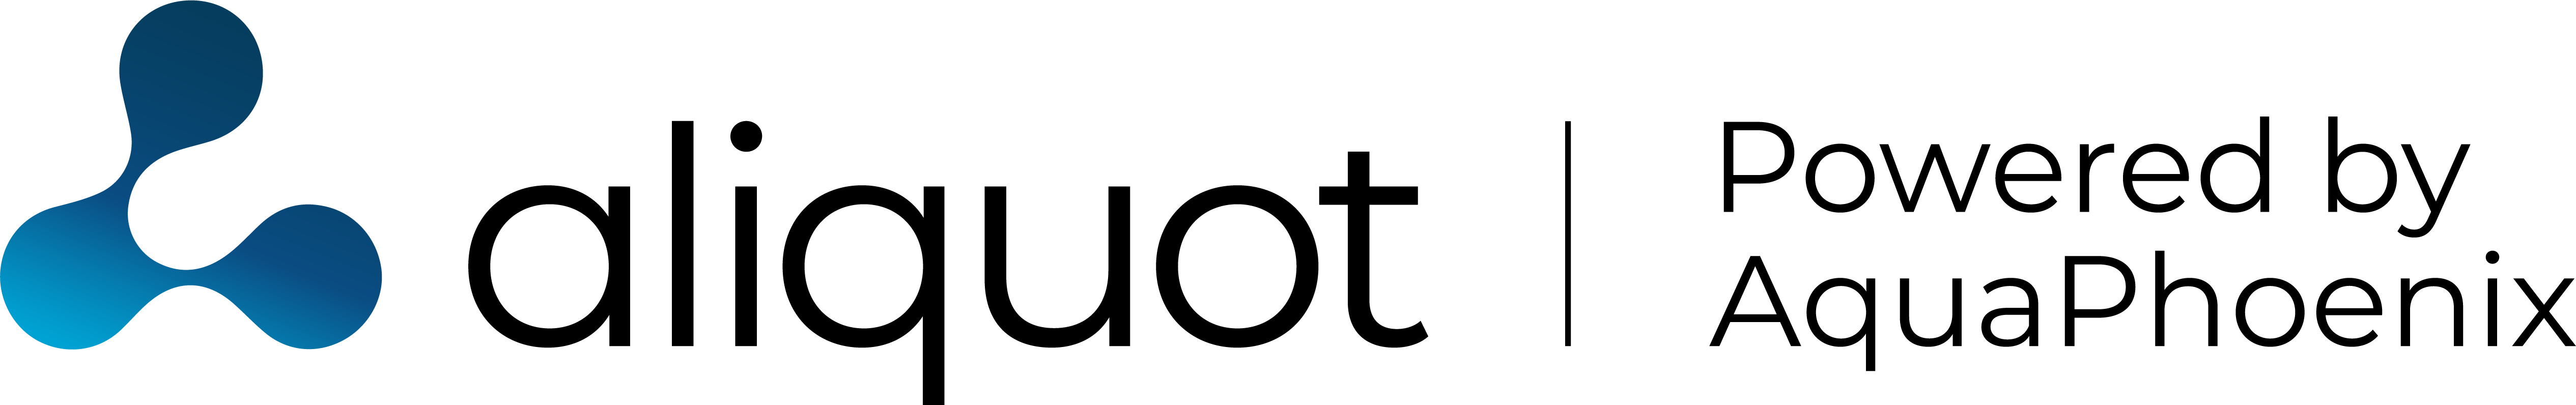 Aliquot Logo wByline RGB